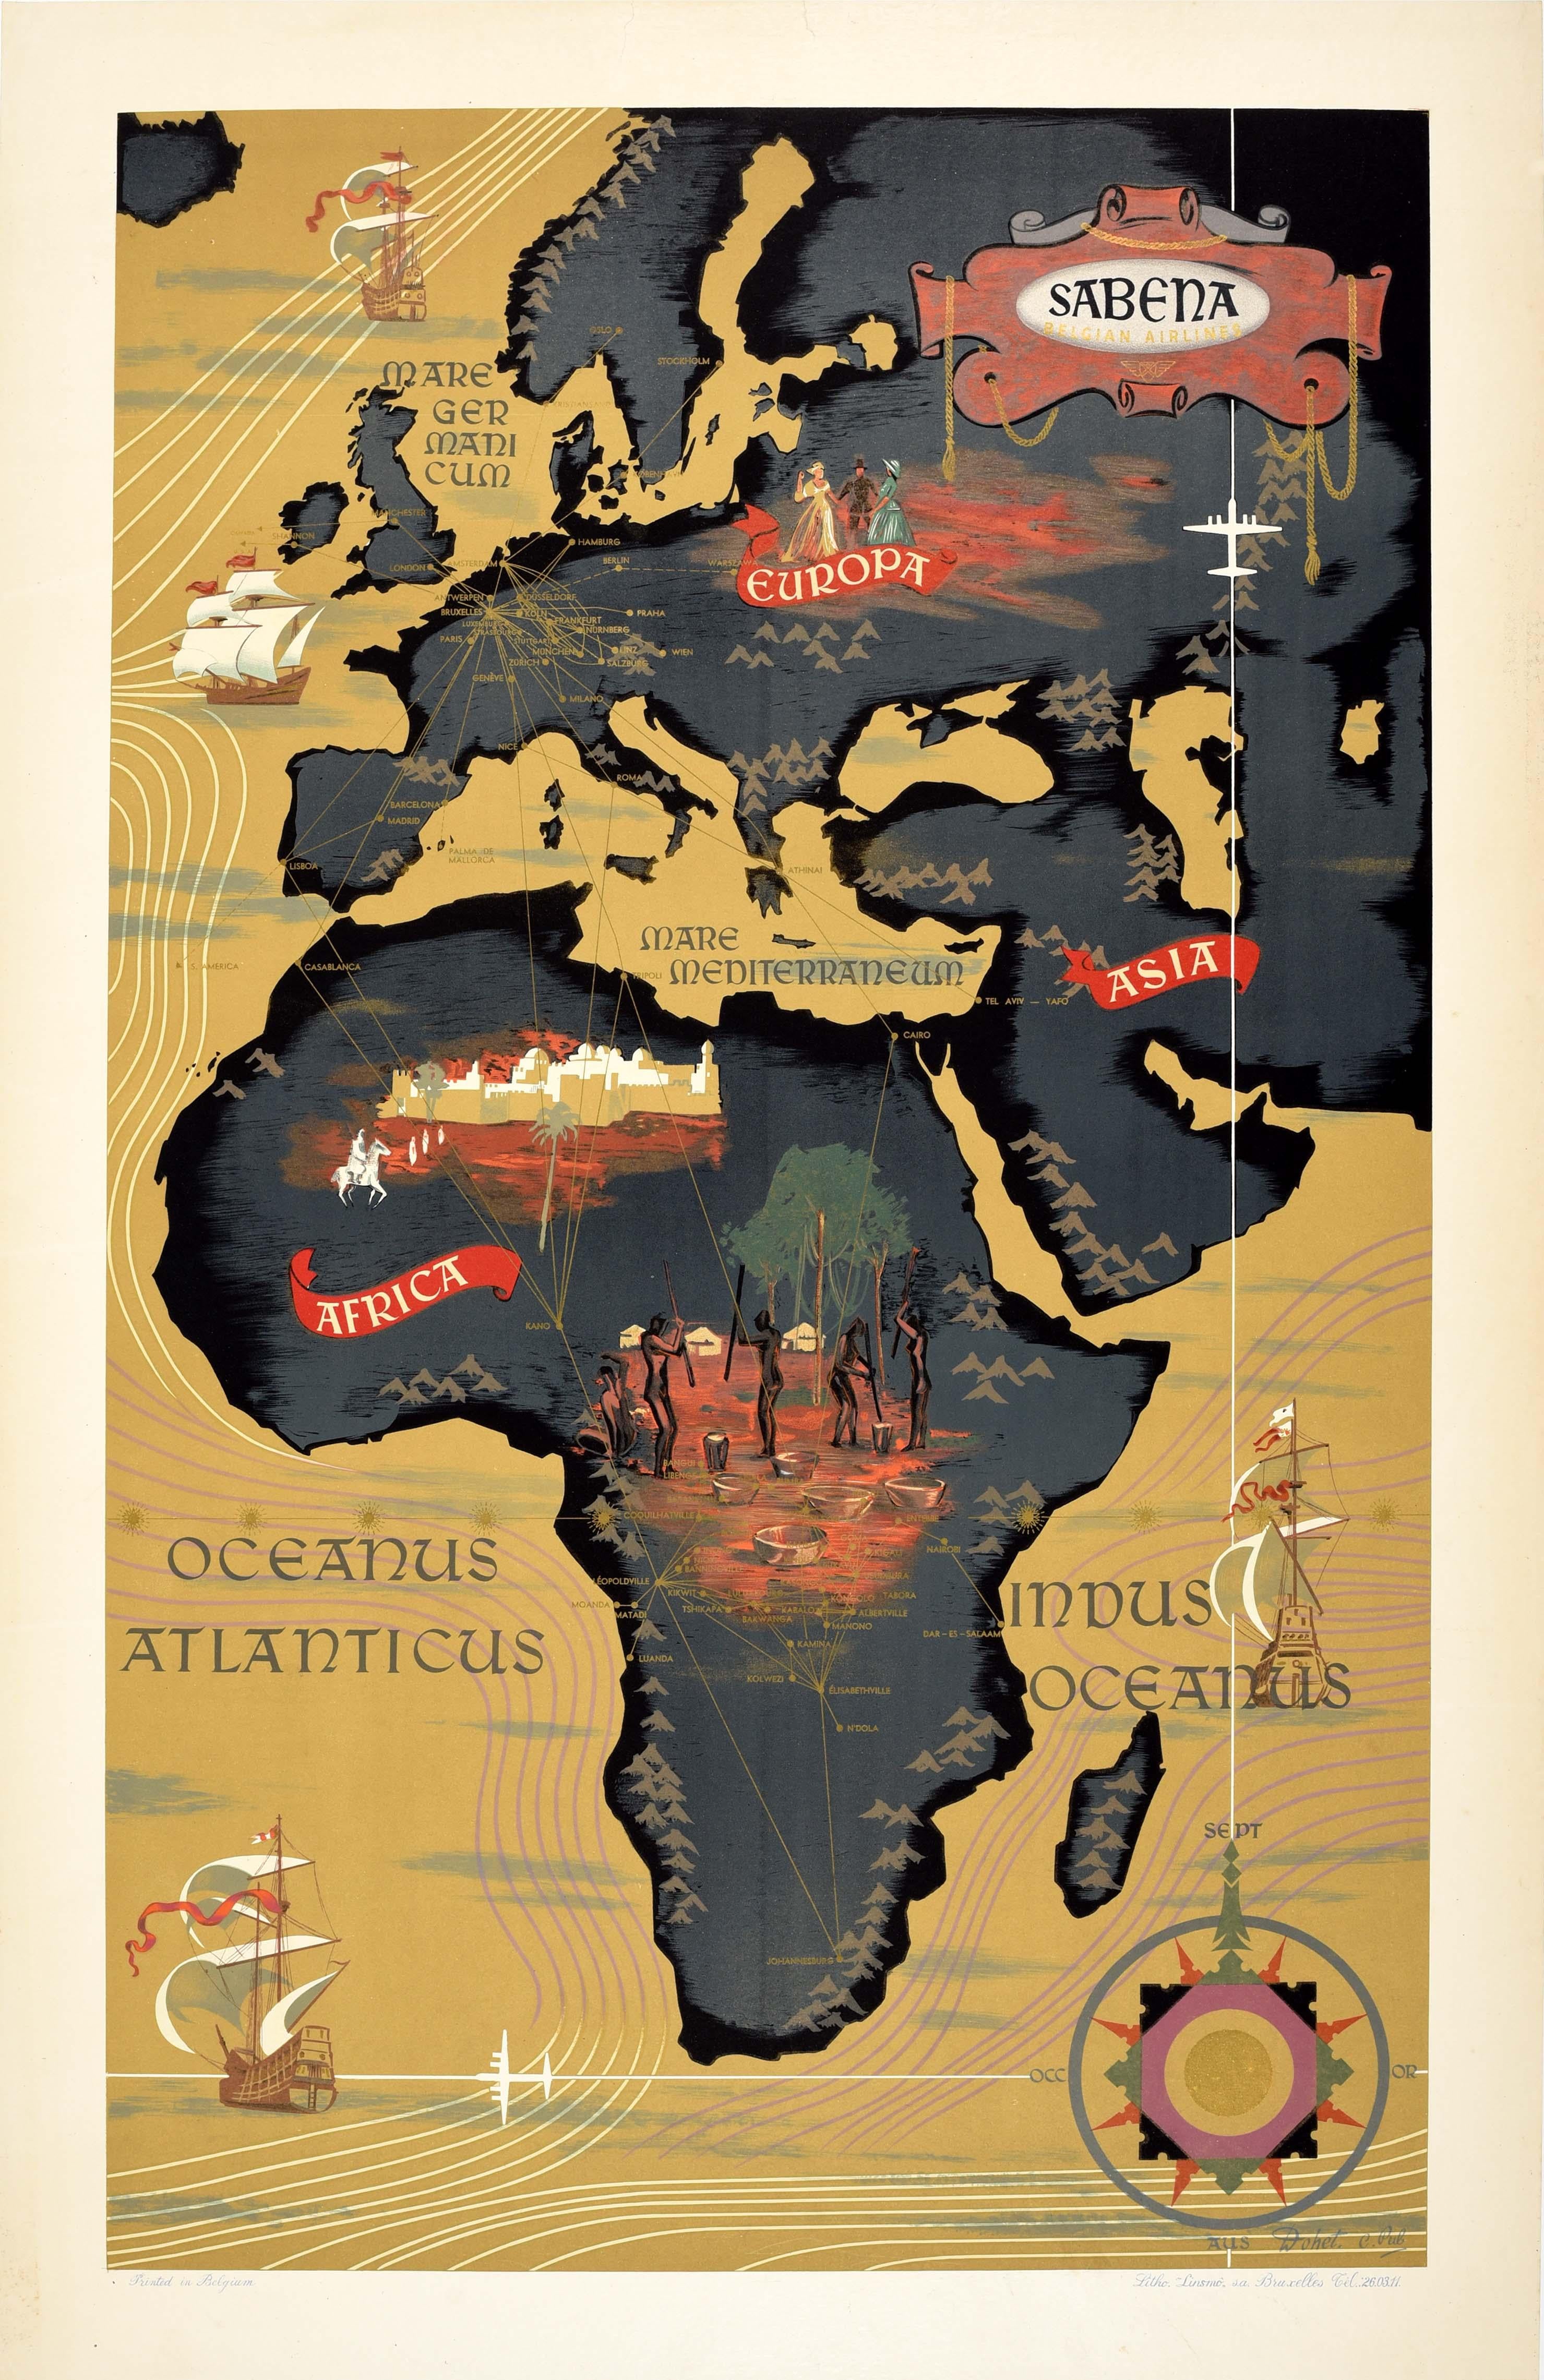 Unknown Print - Original Vintage Poster Sabena Belgian Airlines To Europe Asia Africa Travel Map